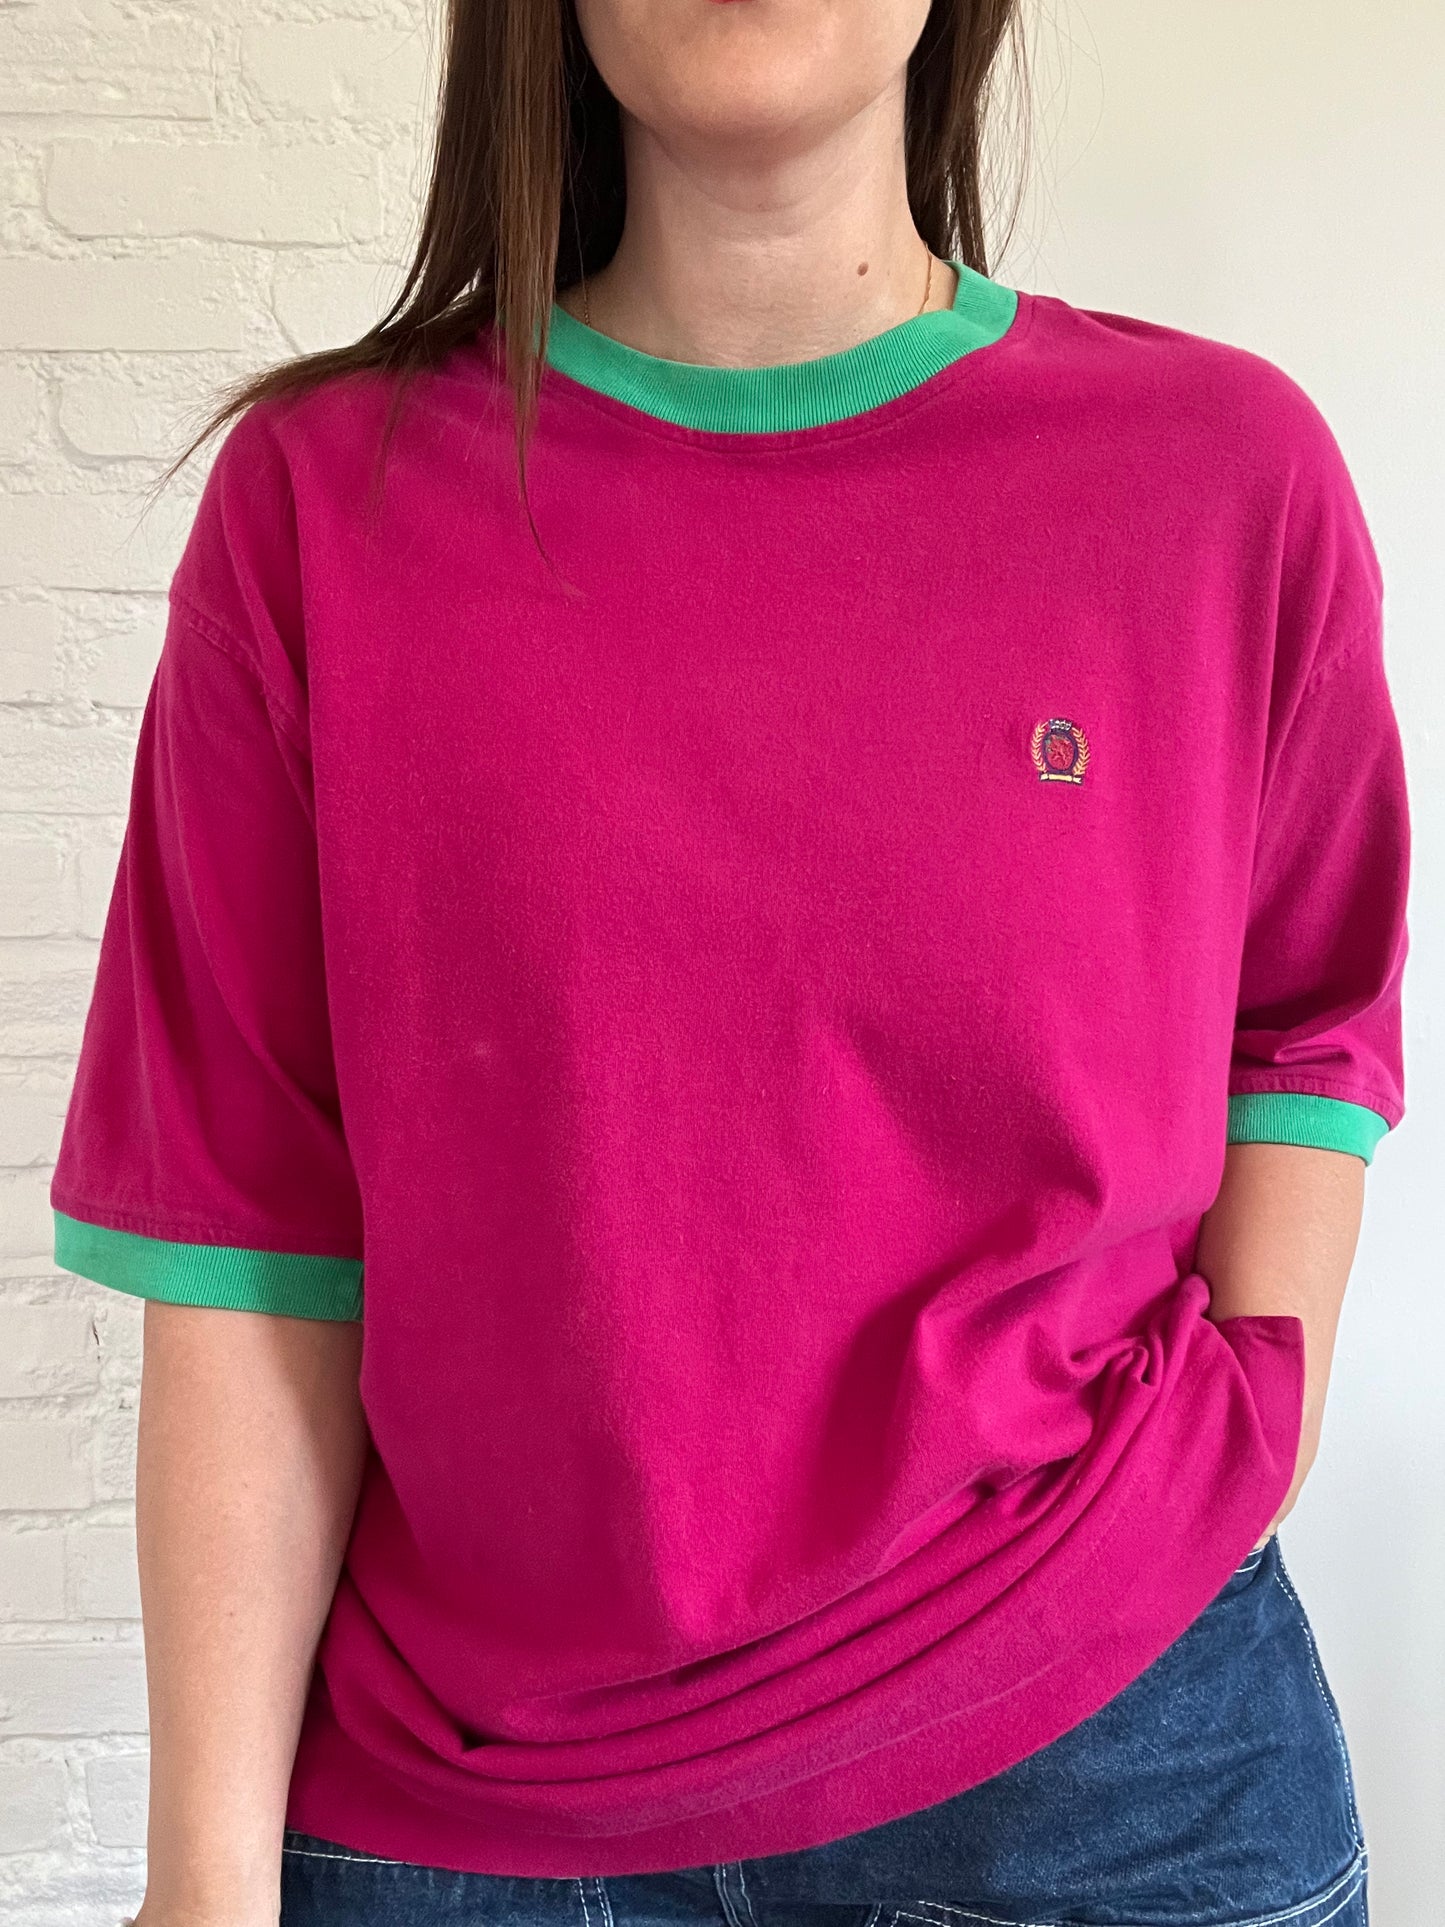 Vintage Tommy Hot Pink Colour Block T-shirt  - XL